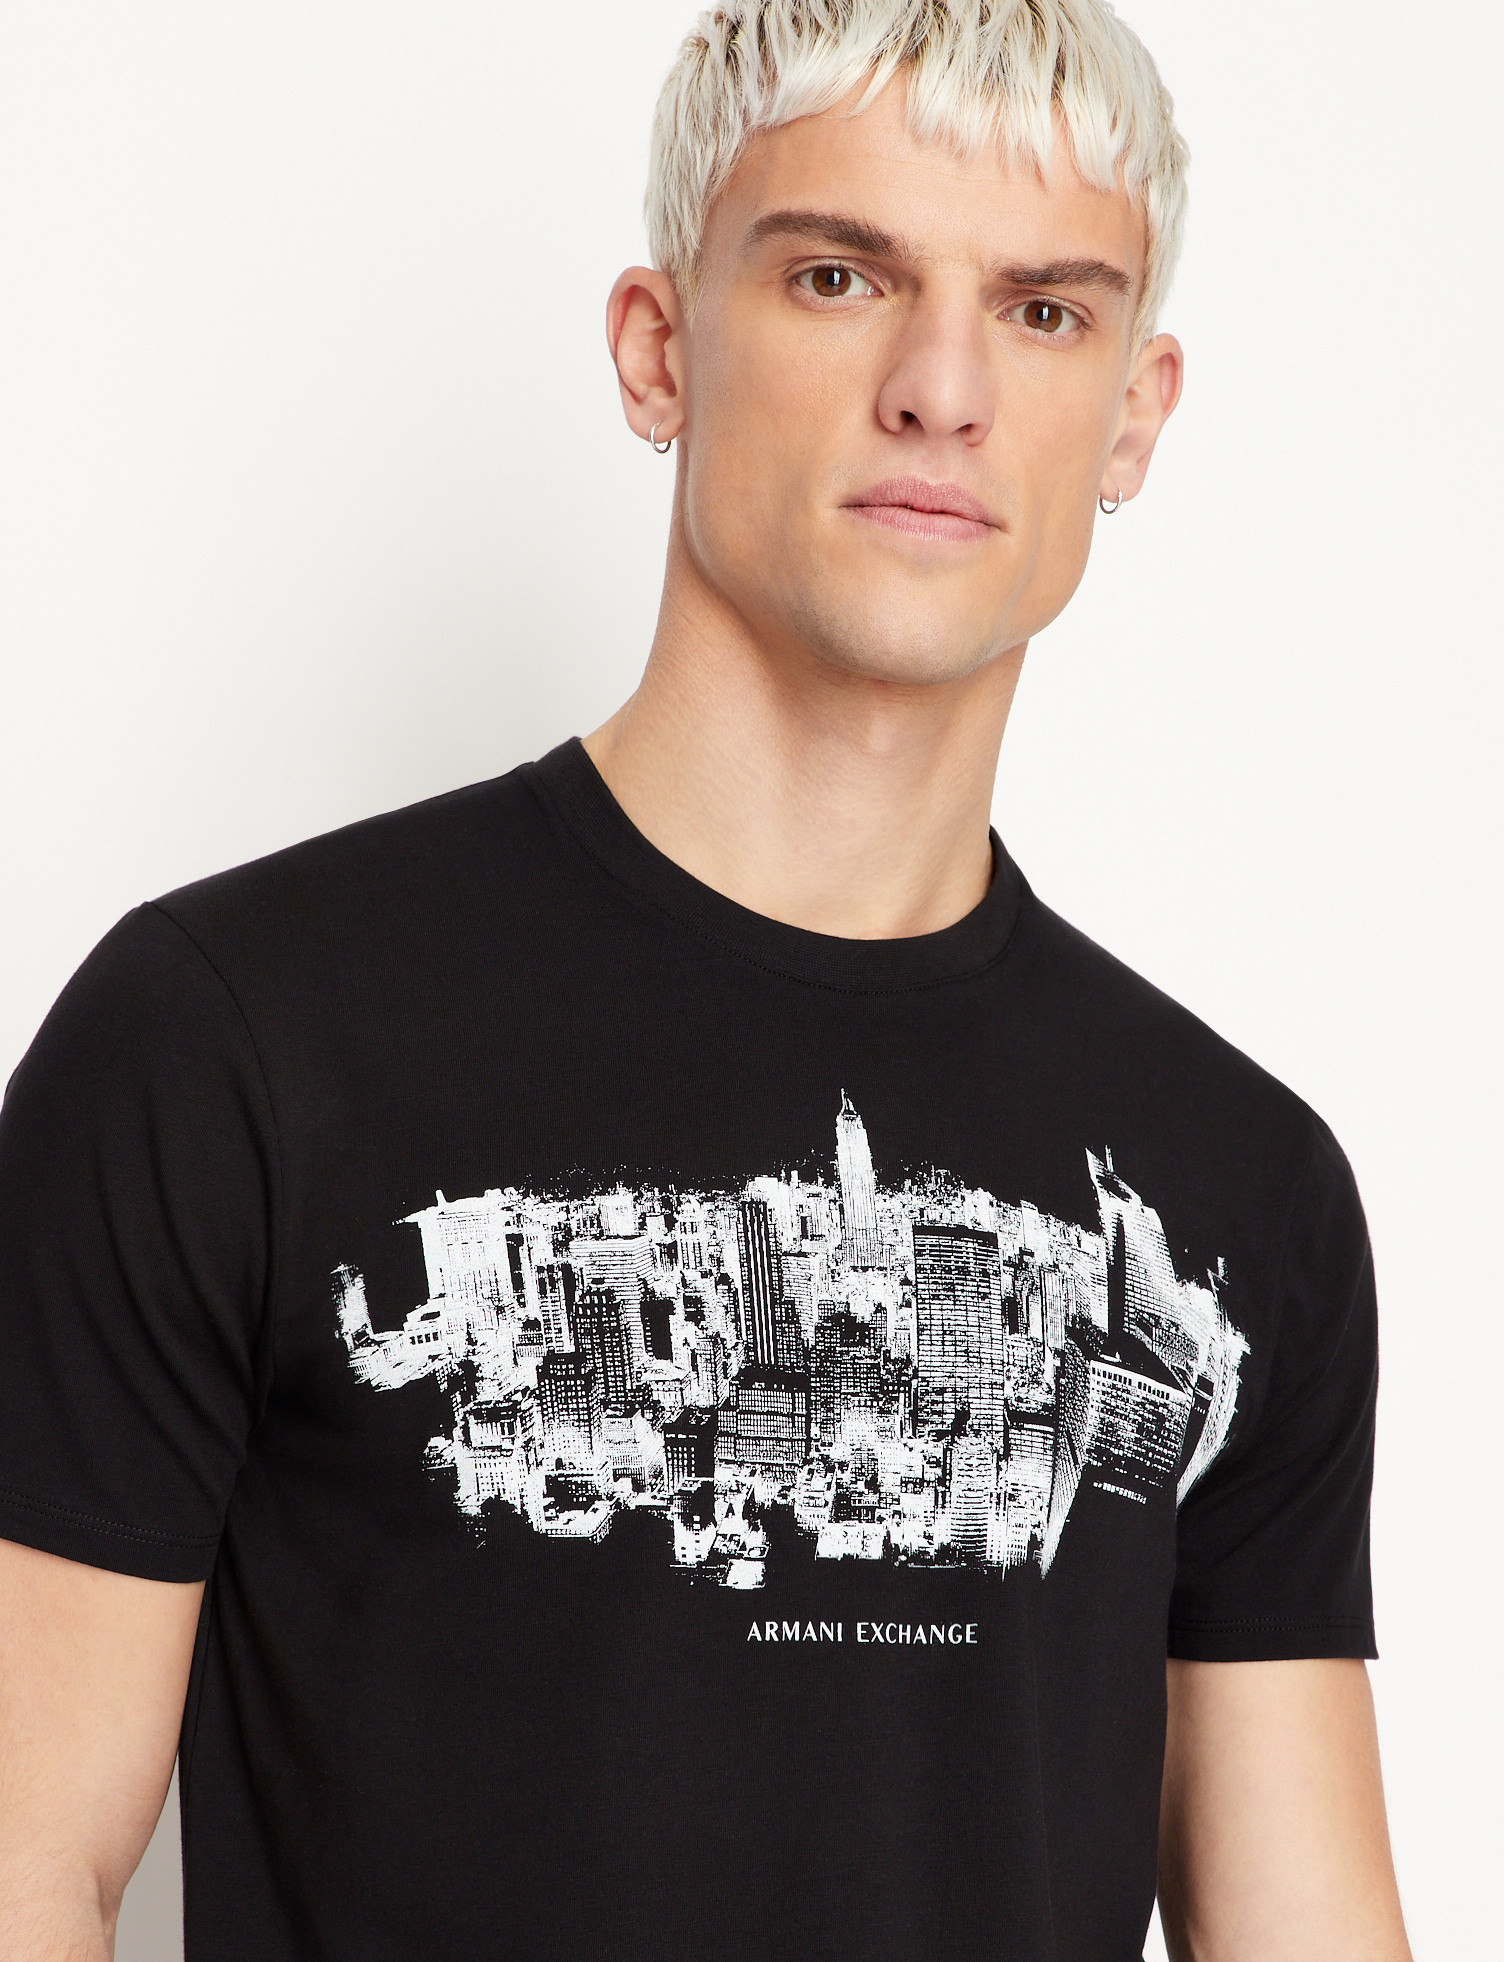 Armani Exchange - T-shirt con stampa slim fit, Nero, large image number 3